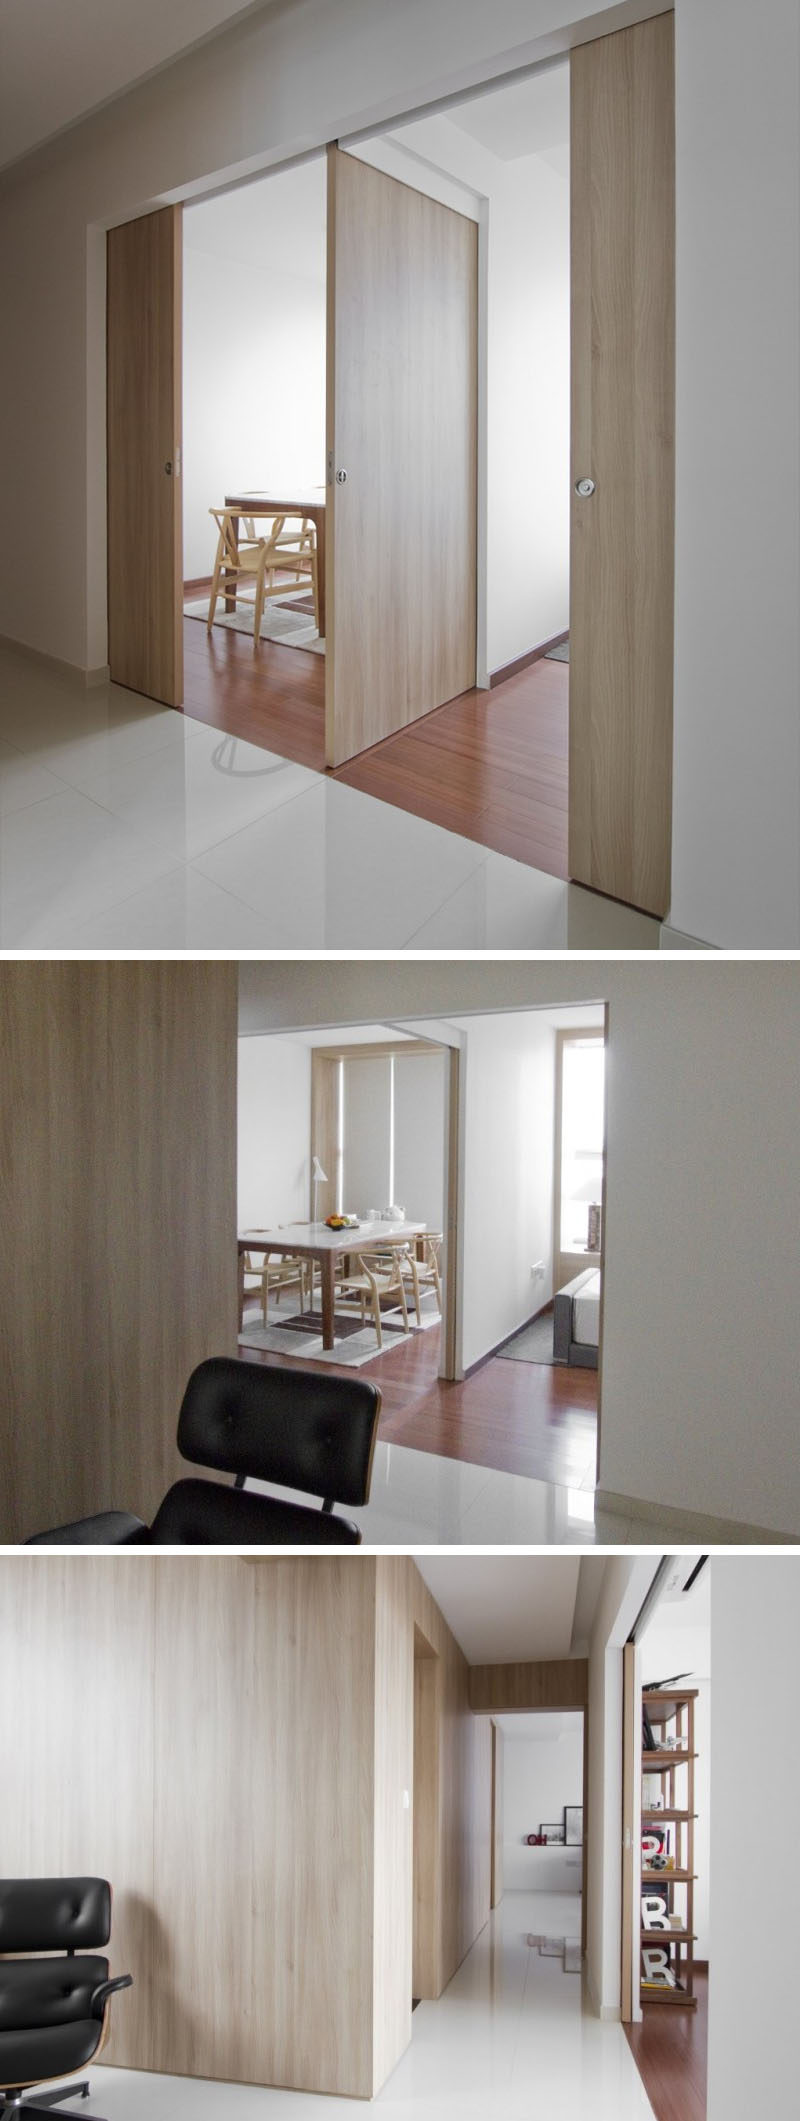 Interior Design Ideas - 5 Alternative Door Designs For ...